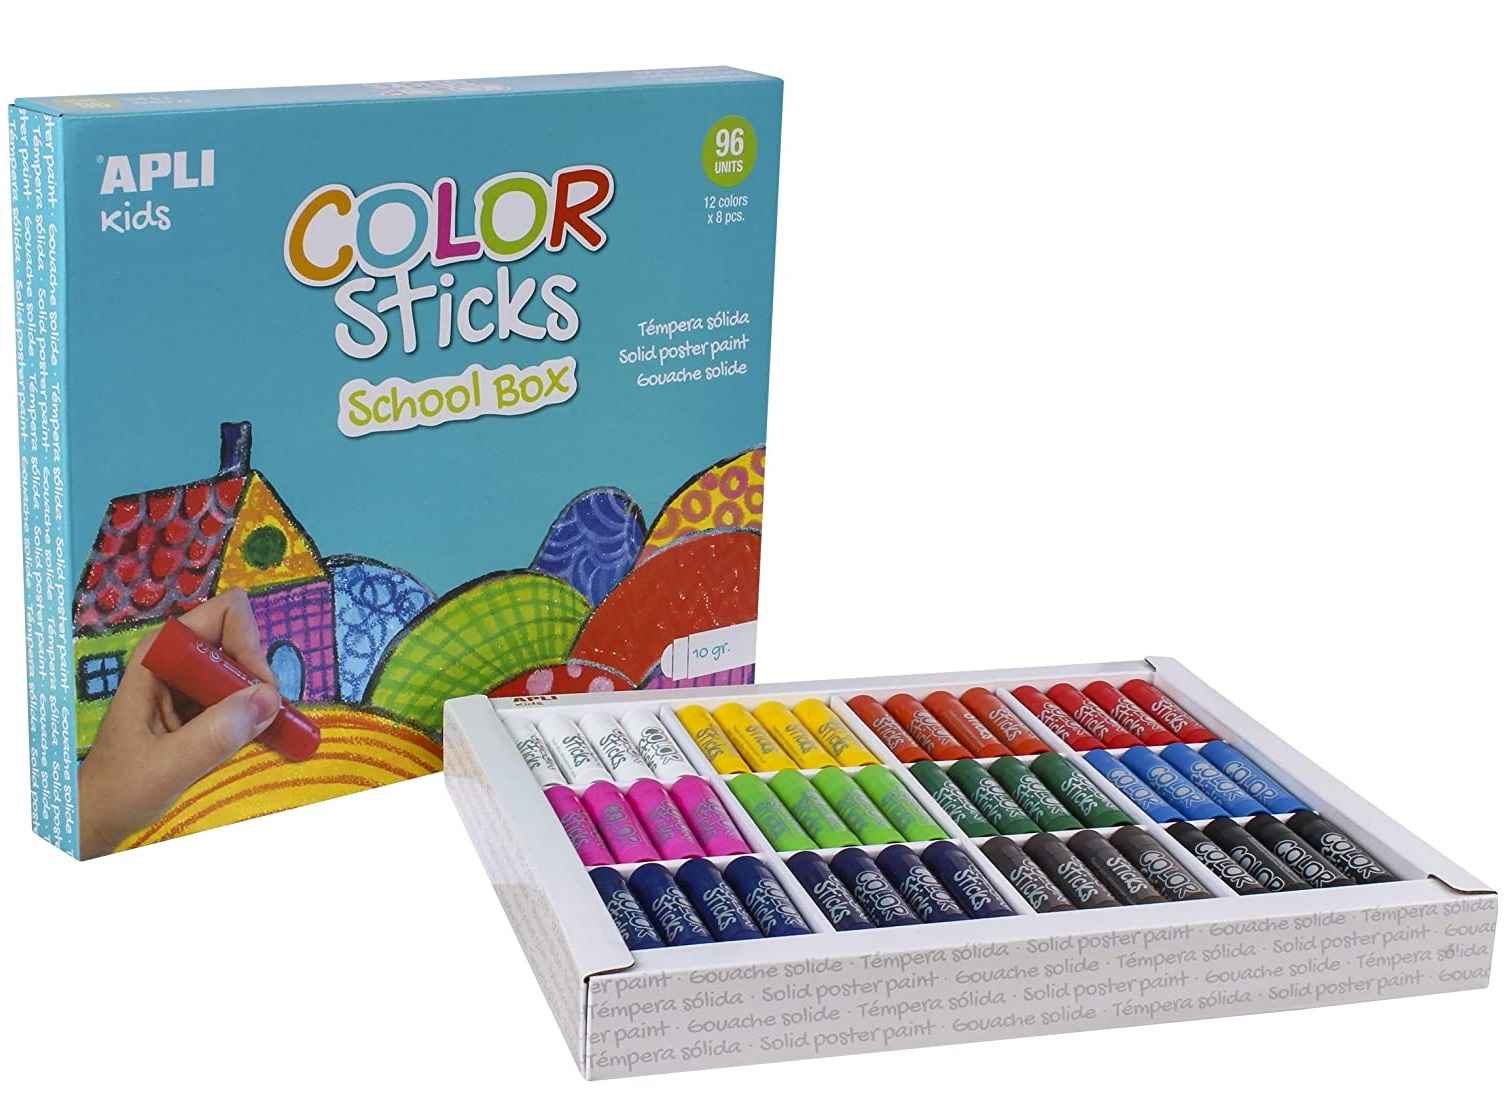 Apli Color Sticks School Pack